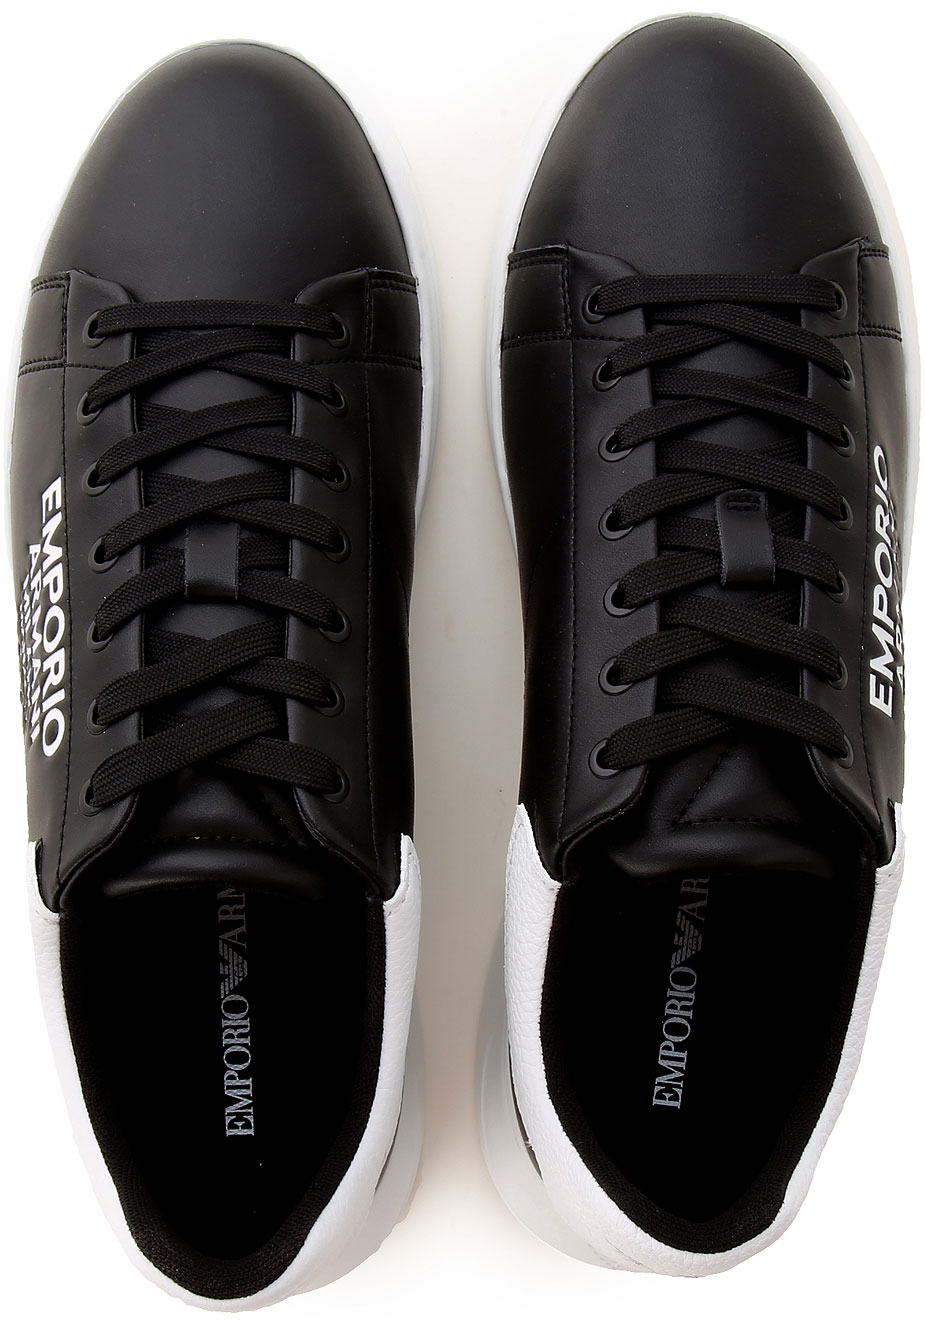 Mens Shoes Emporio Armani, Style code: x4x264-xm552-n300